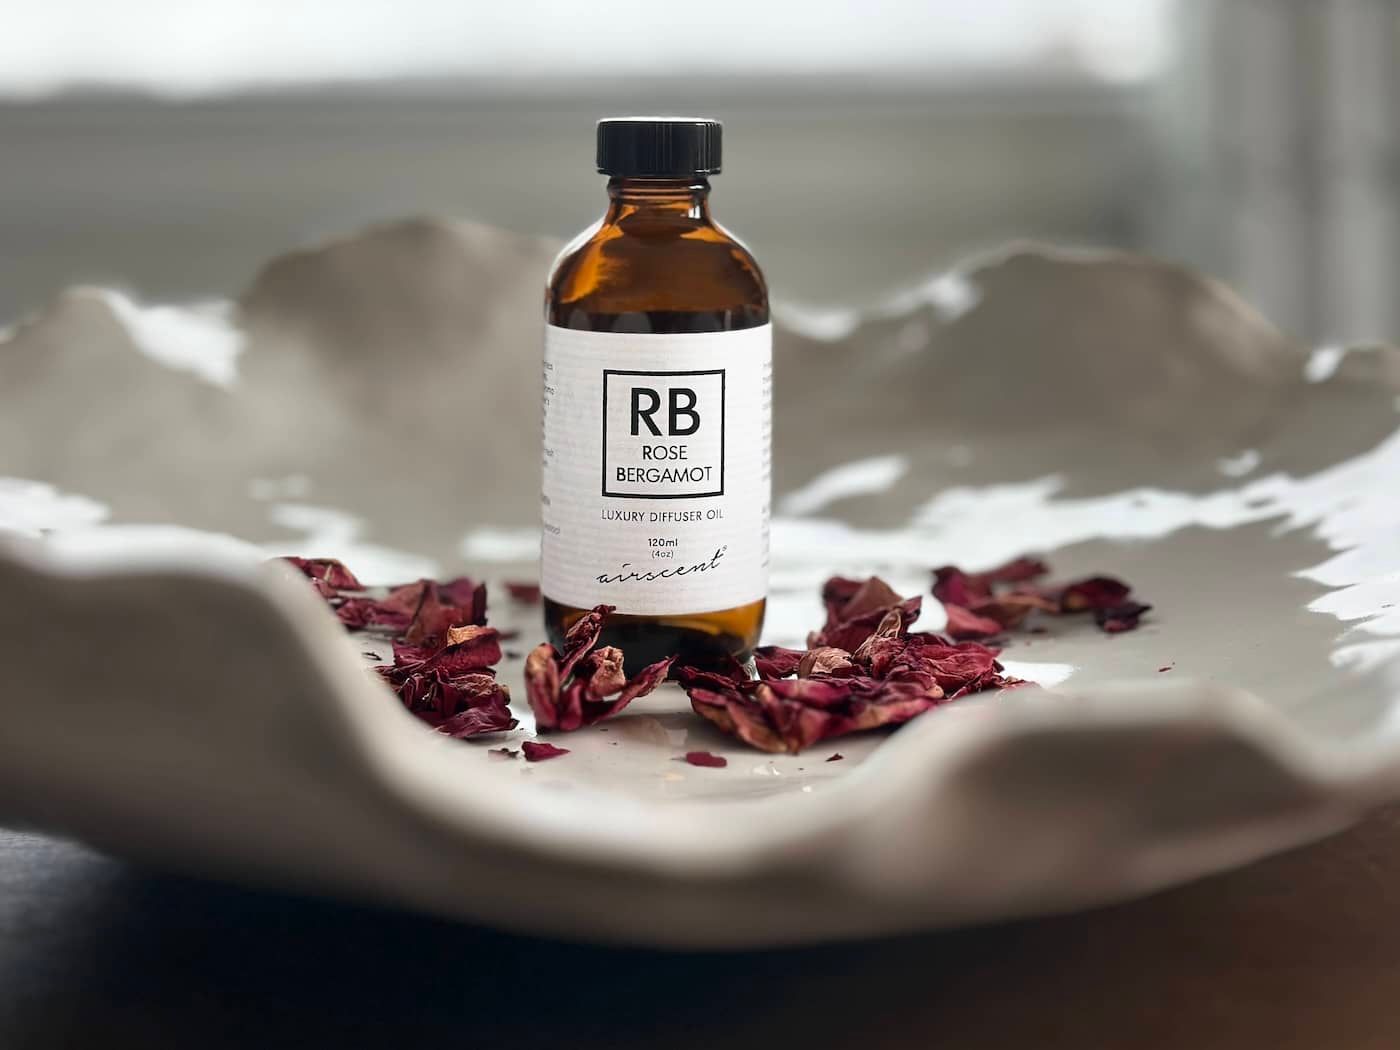 Rose Bergamot diffuser oil blend with rose petals